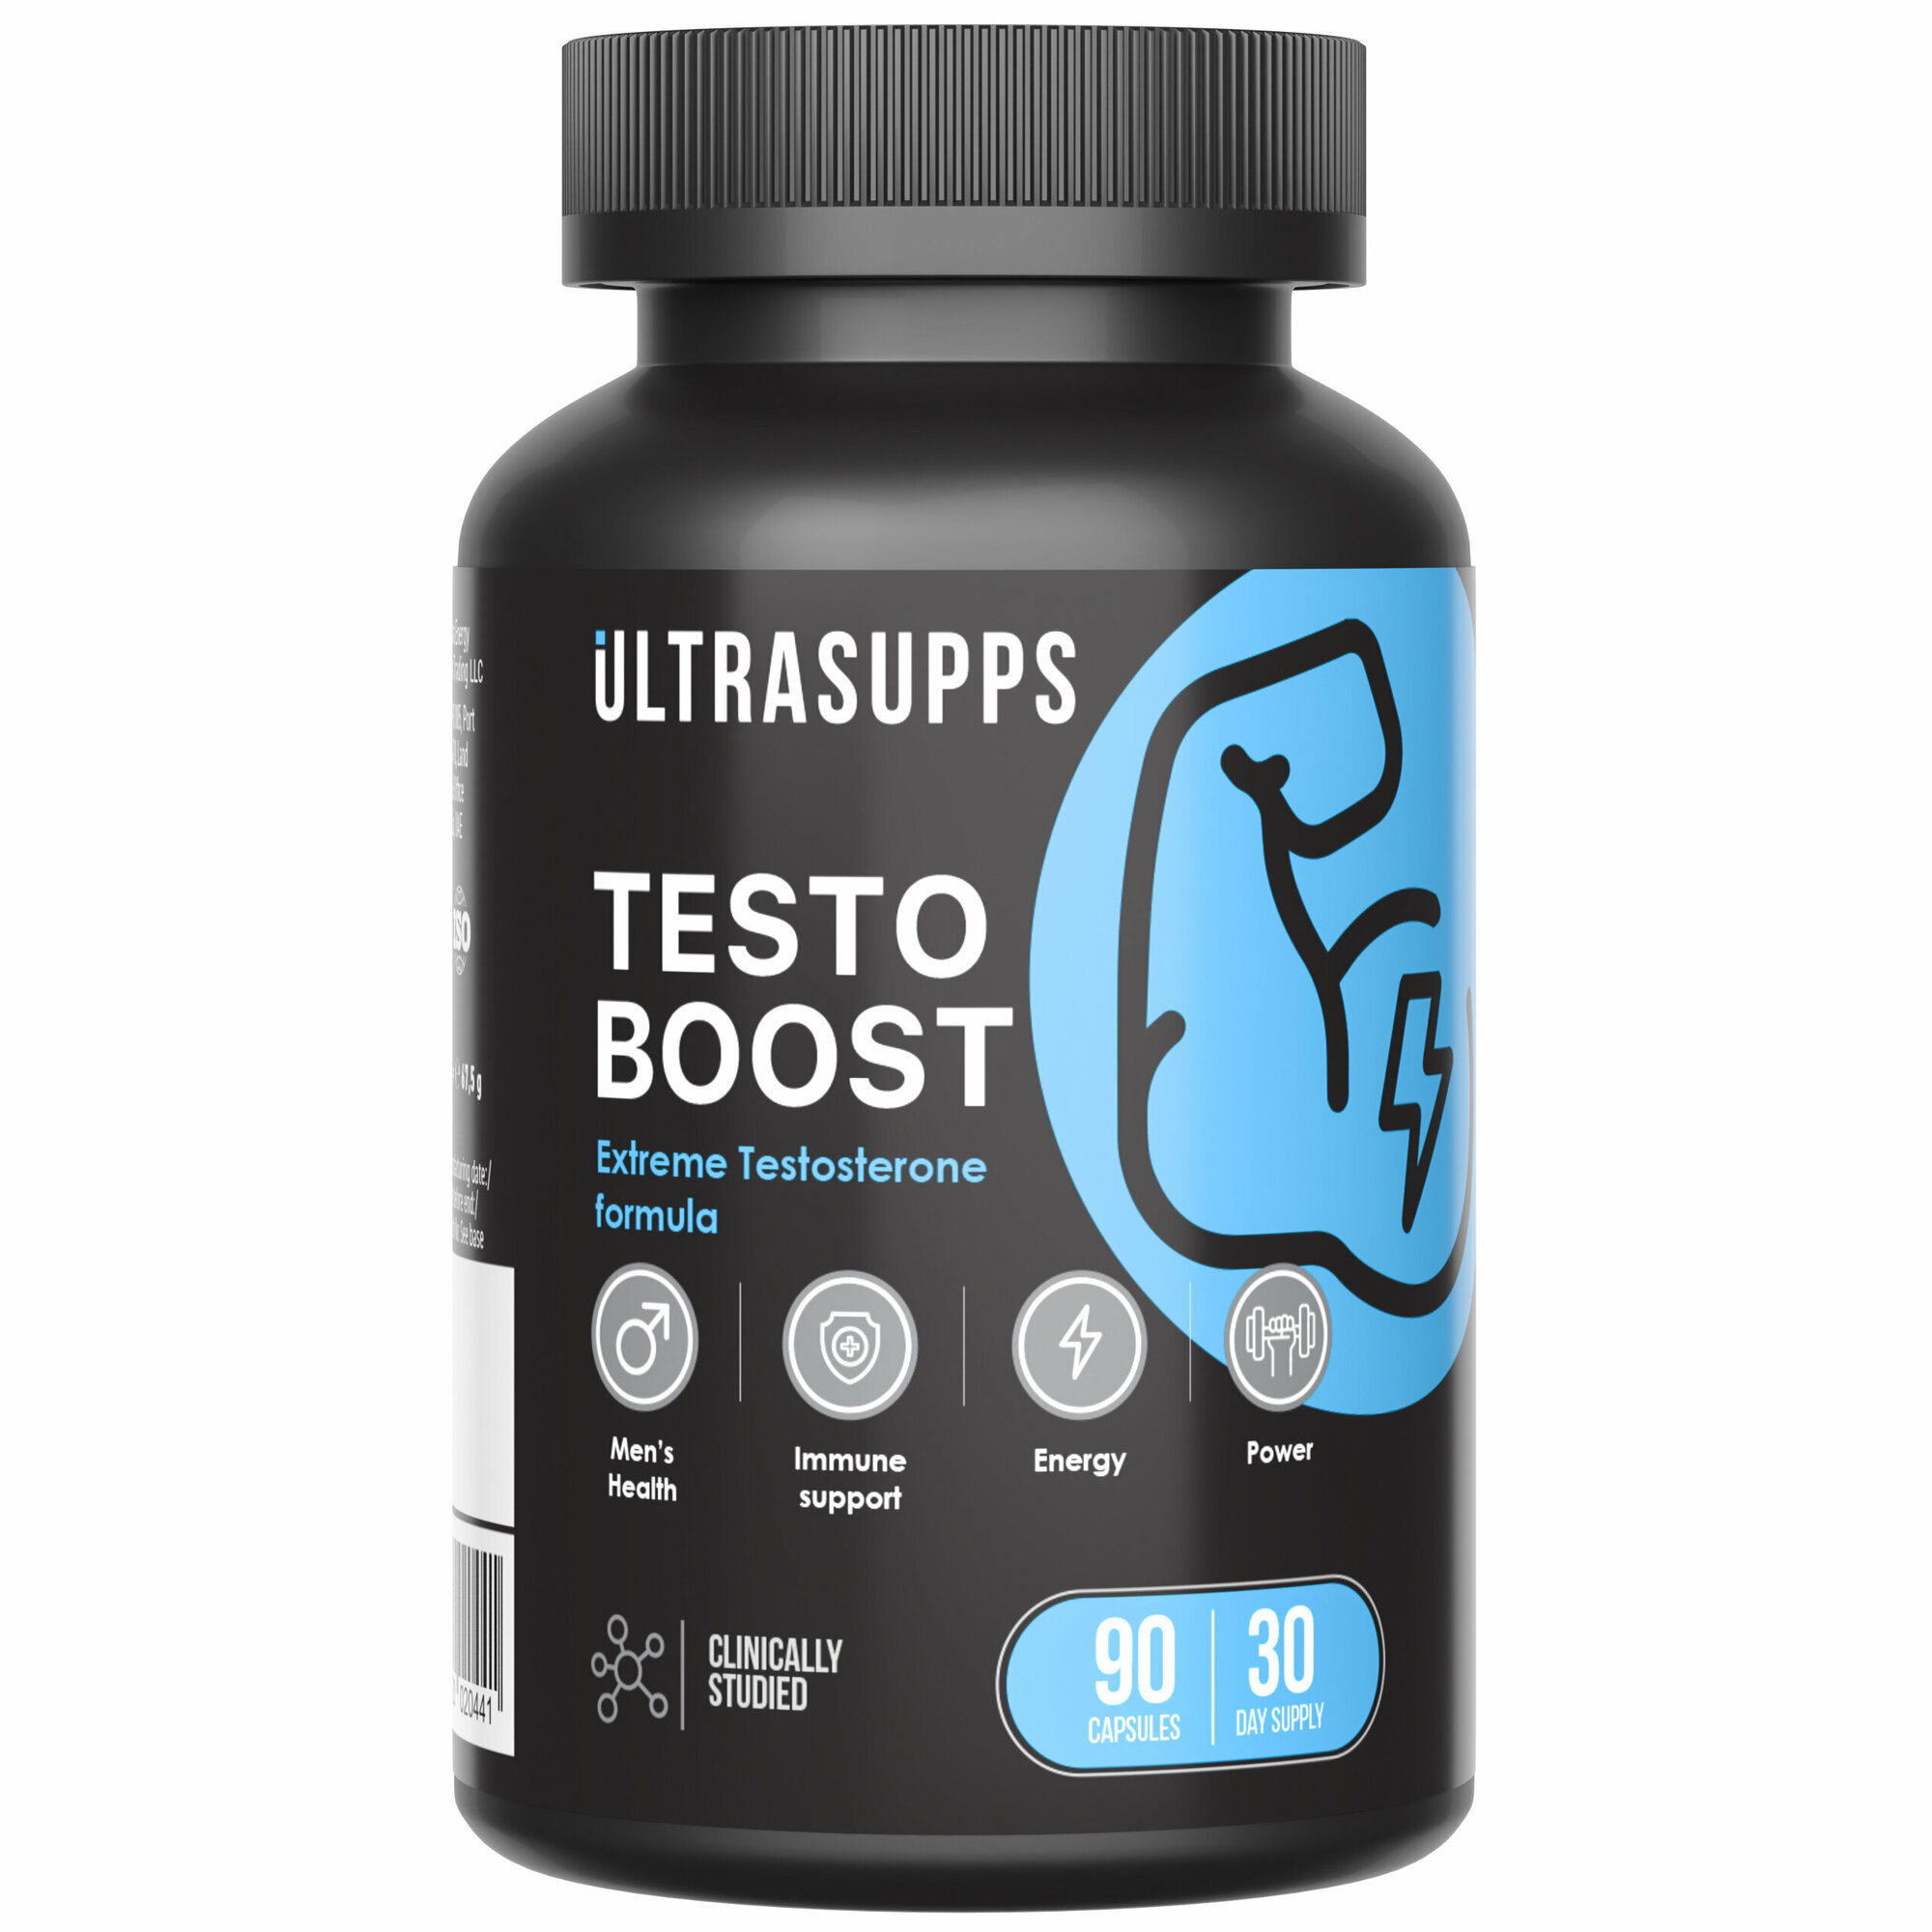 Для повышения тестостерона тестобустер UltraSupps Testoboost - 90 капсул